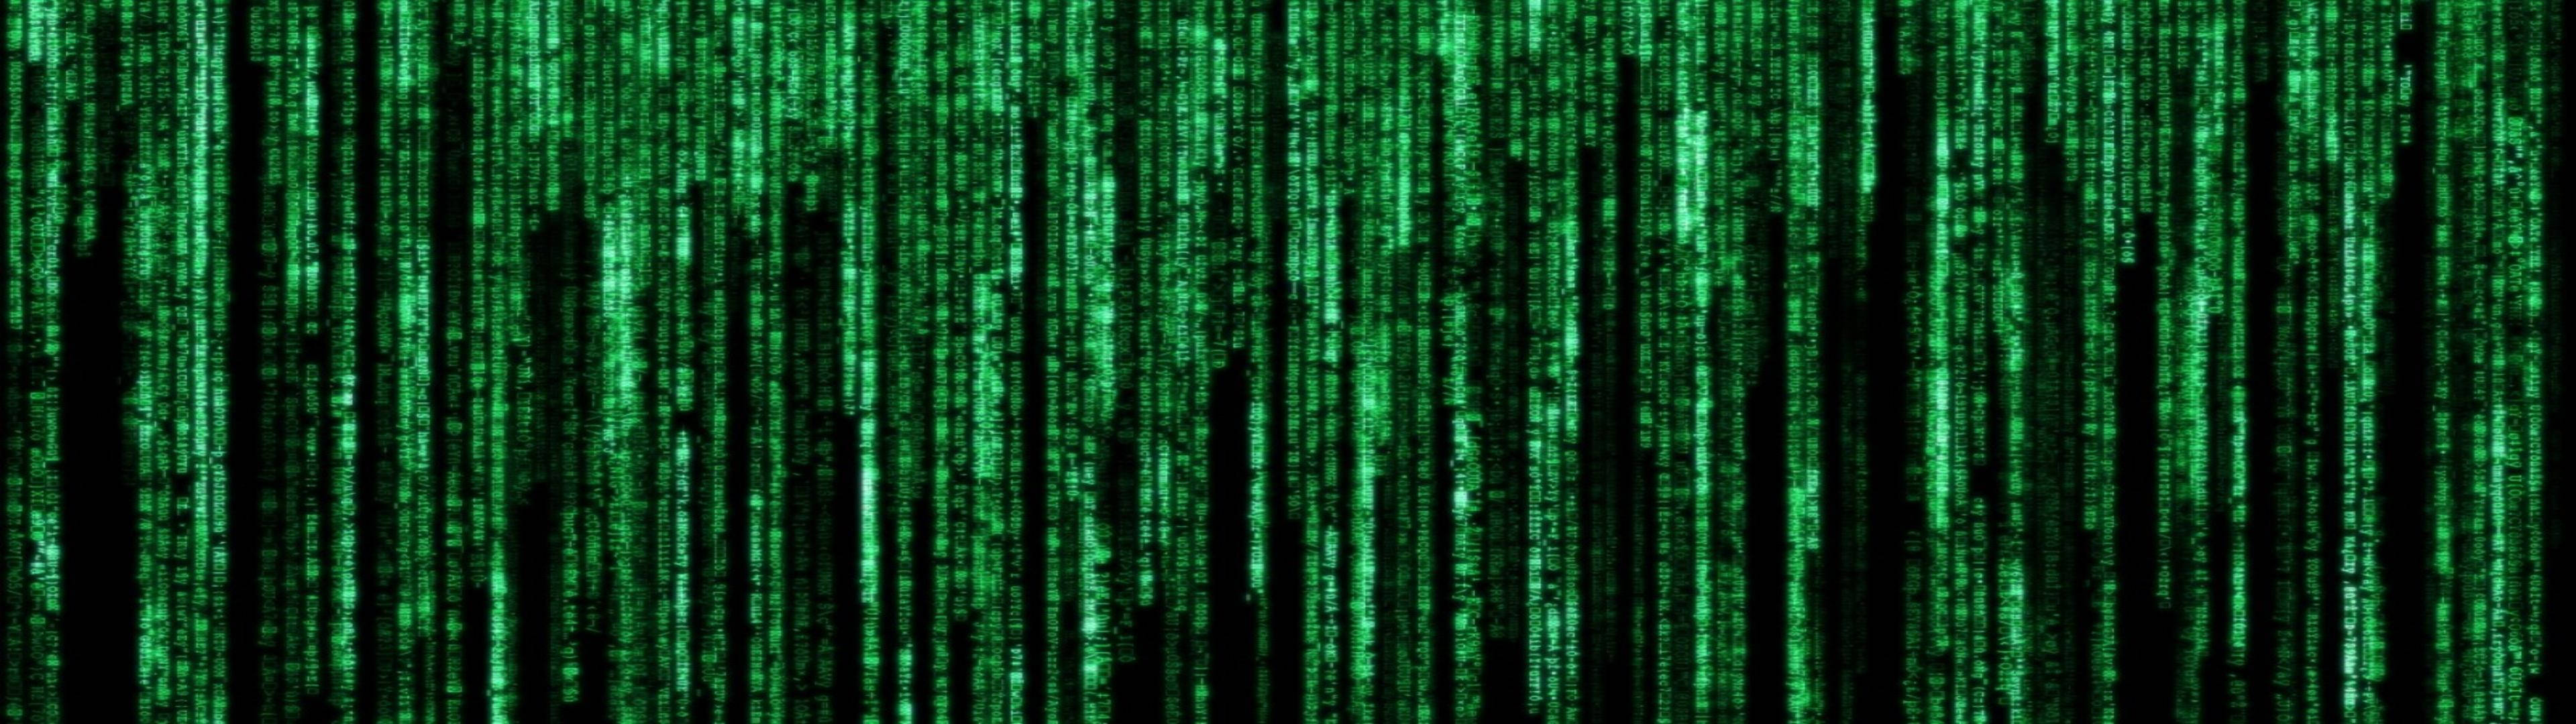 Dynamic Green Binary Hack Matrix Wallpaper